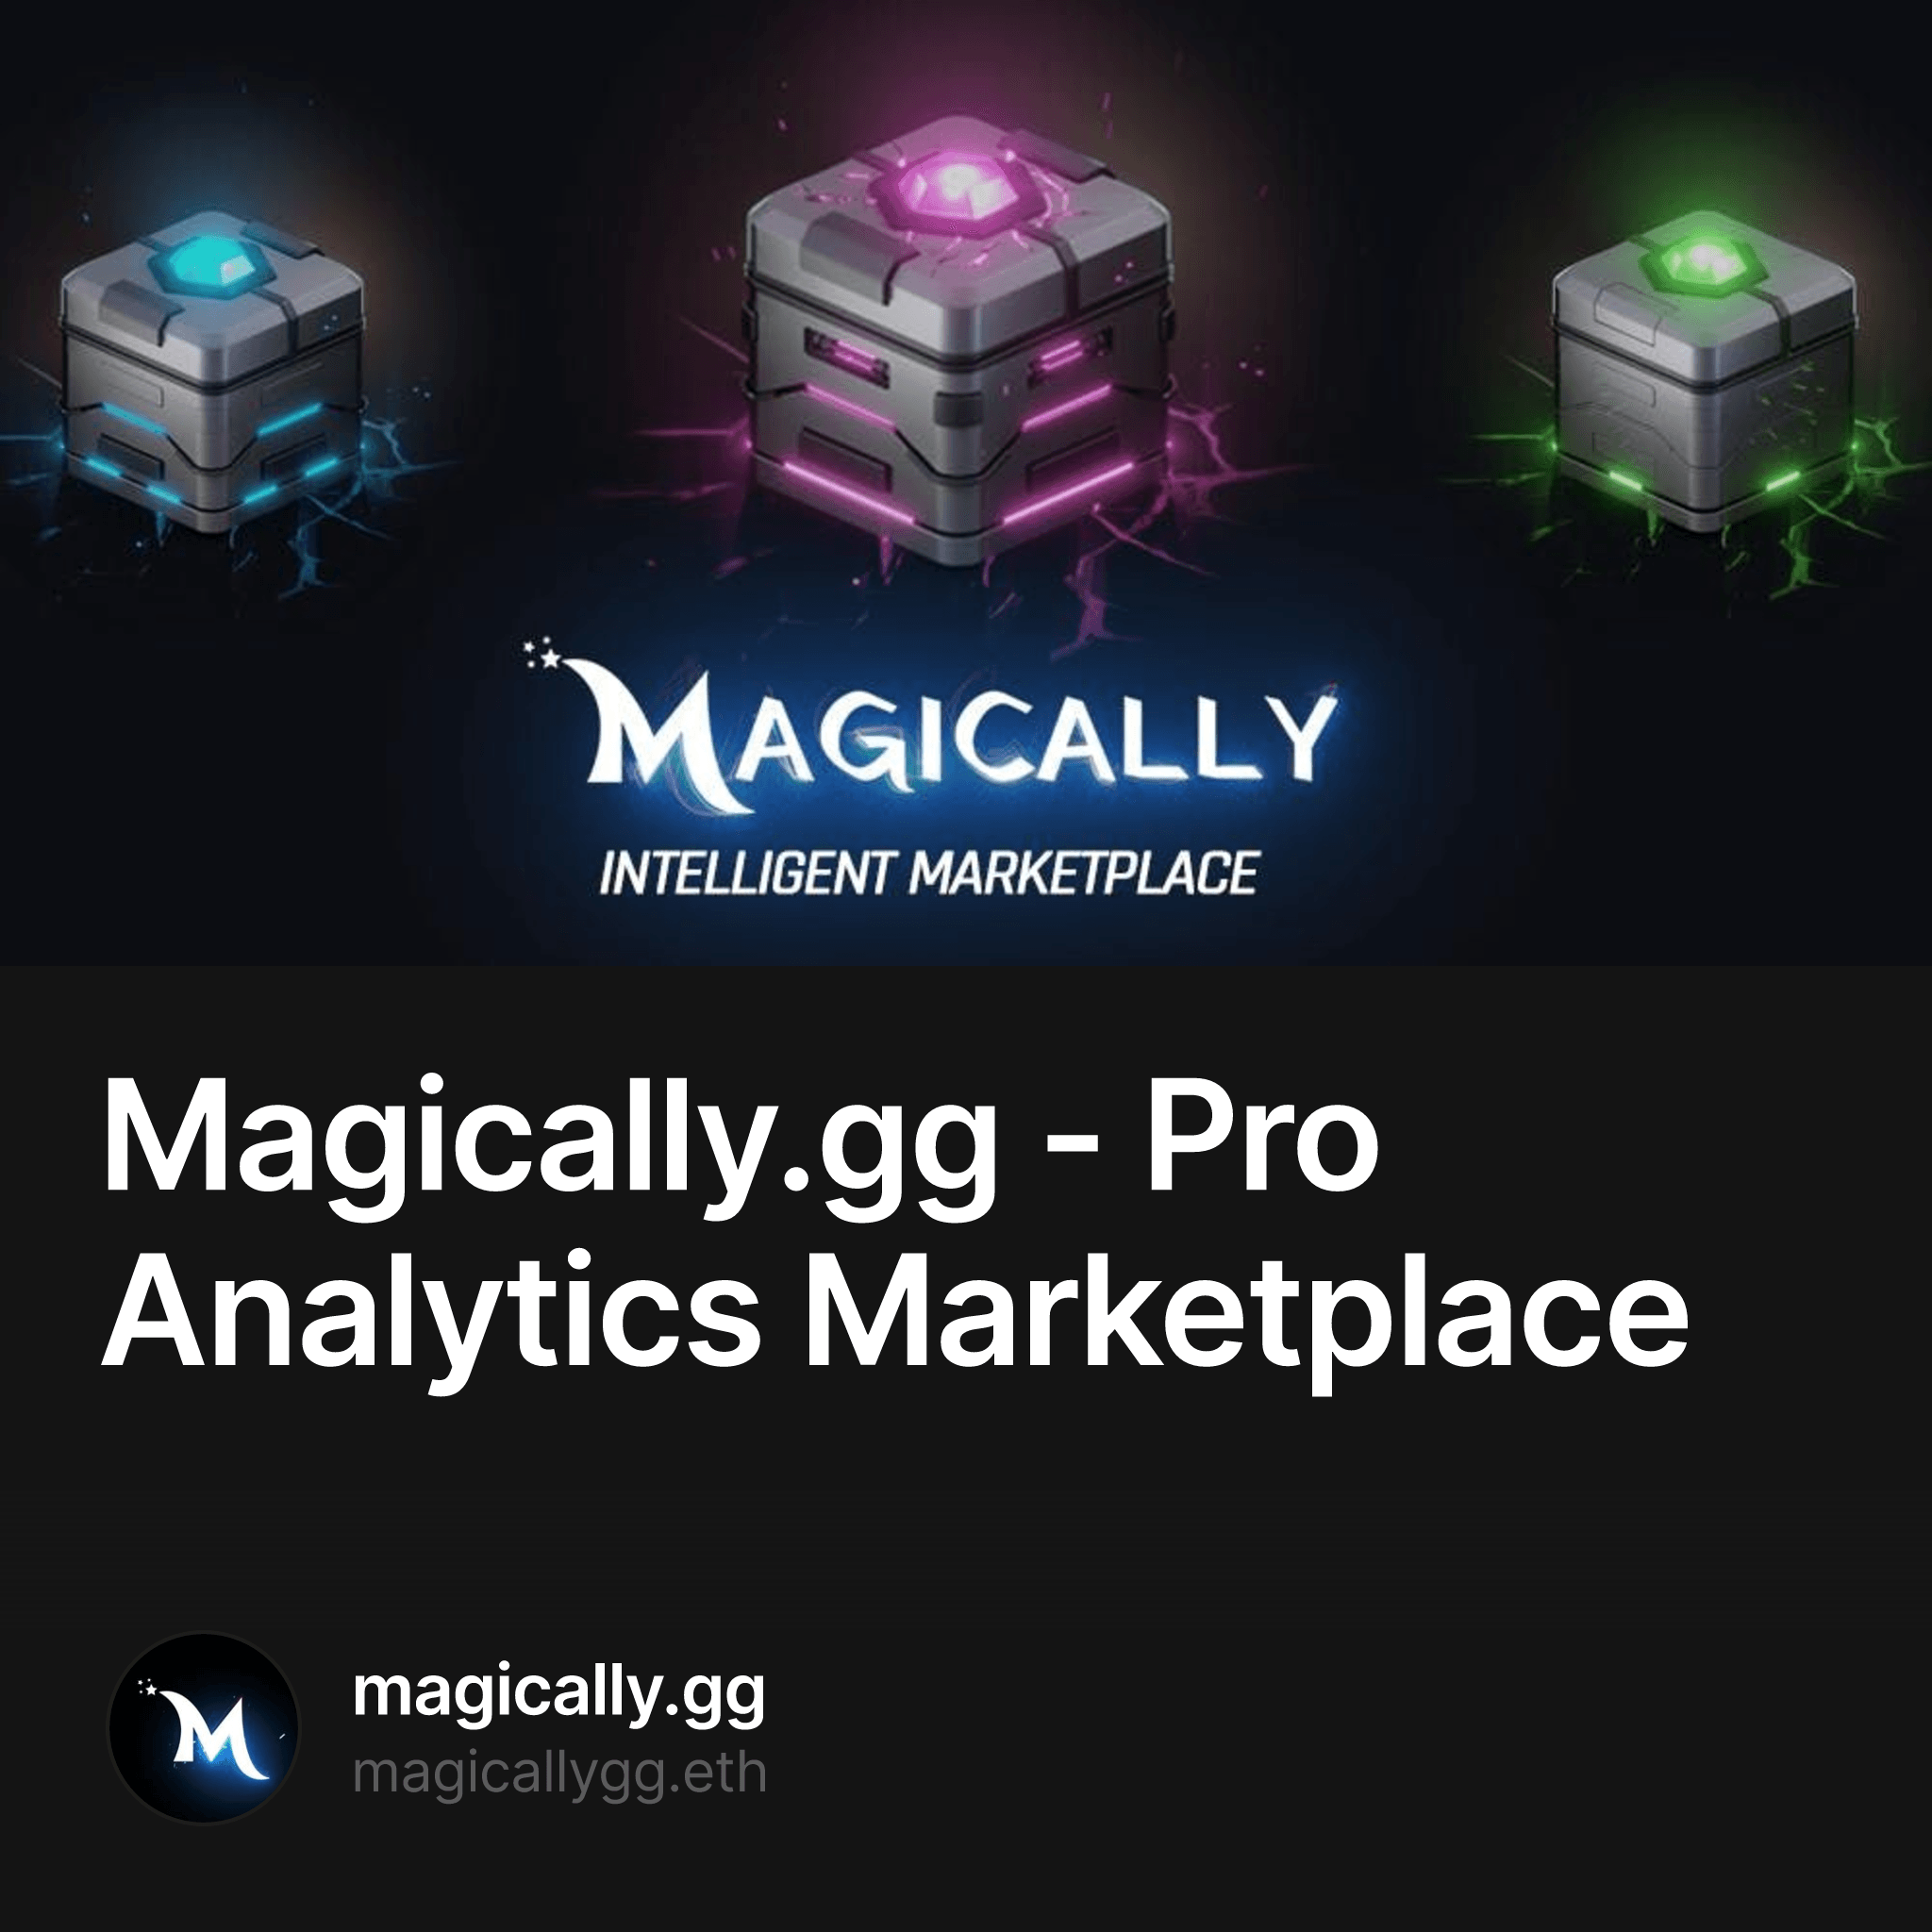 Magically.gg - Pro Analytics Marketplace 353/1000